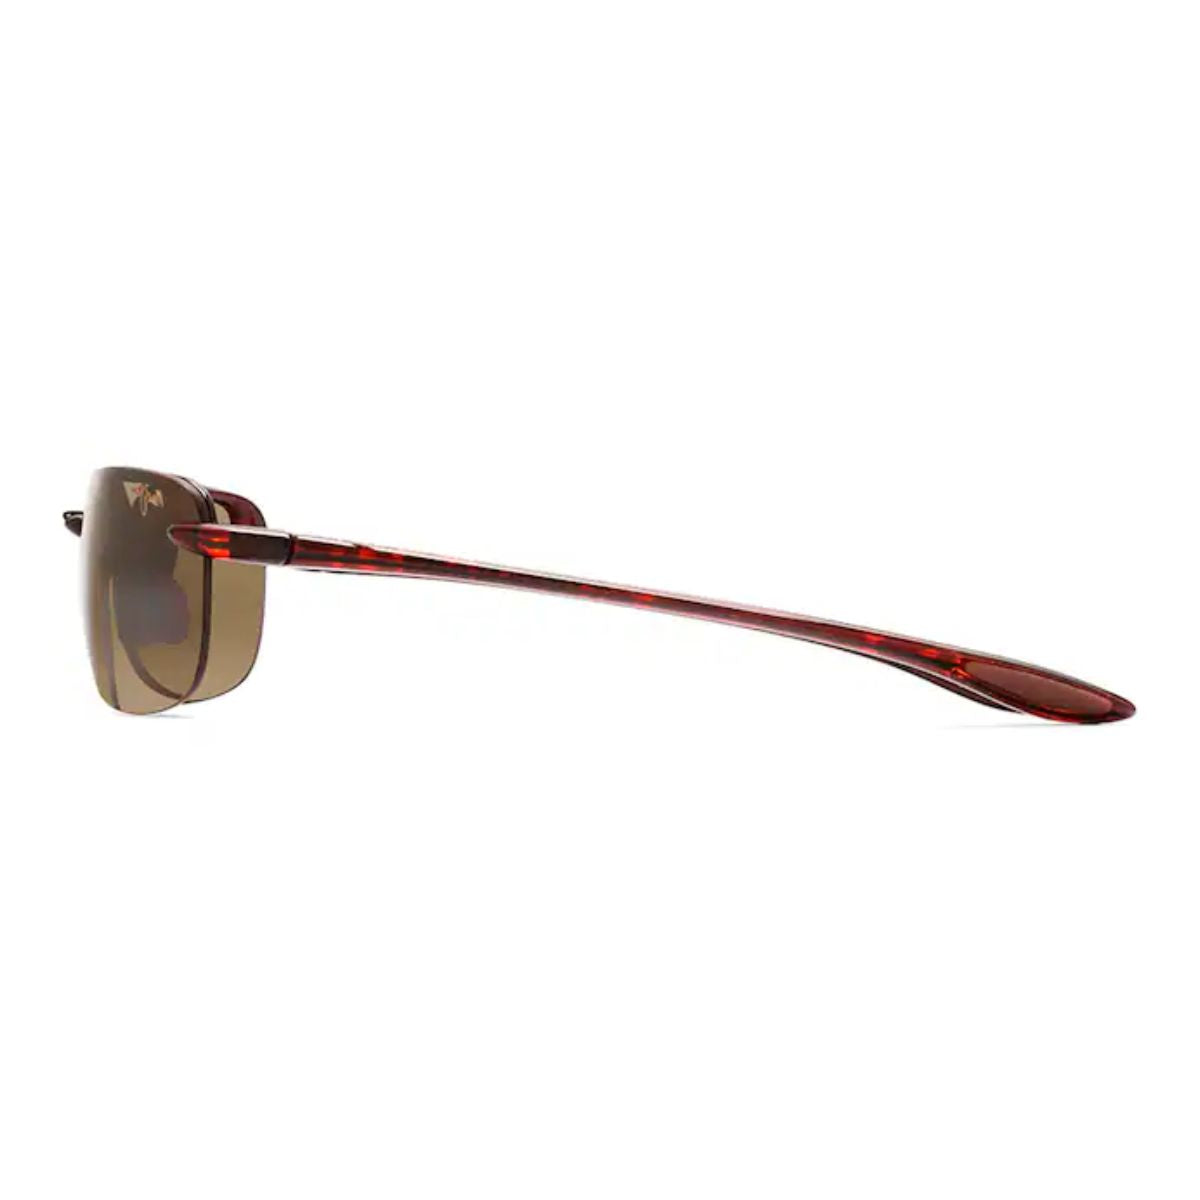 "Buy Trending Maui Jim Rim Less Goggles For Men's At Optorium Online Store | Offer Maui Jim Sunglasses"